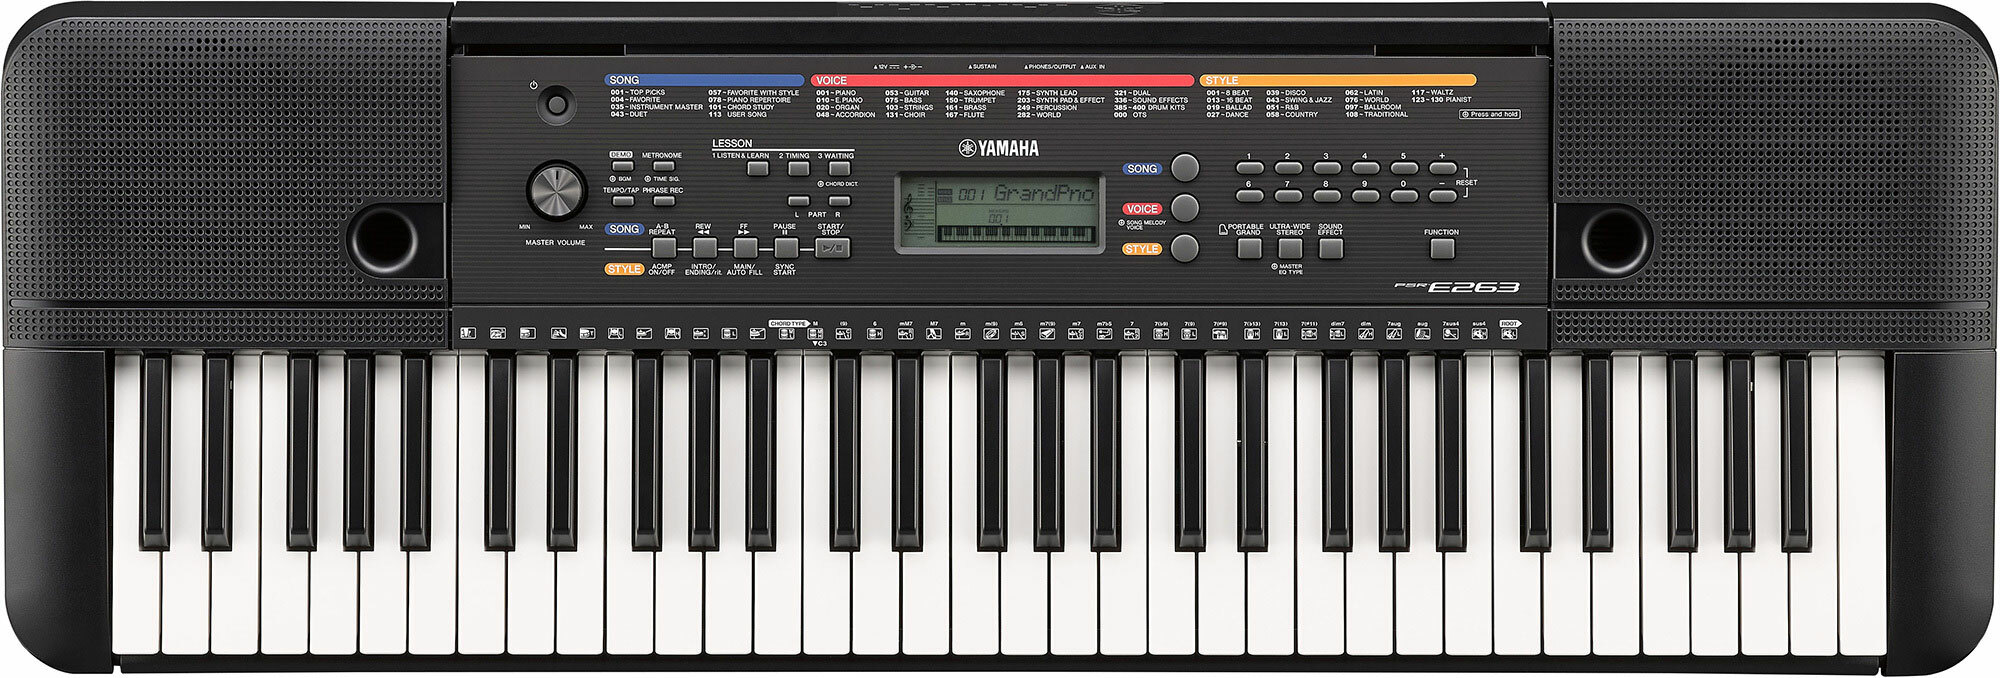 Yamaha Psr-e263 - - Entertainer Keyboard - Main picture